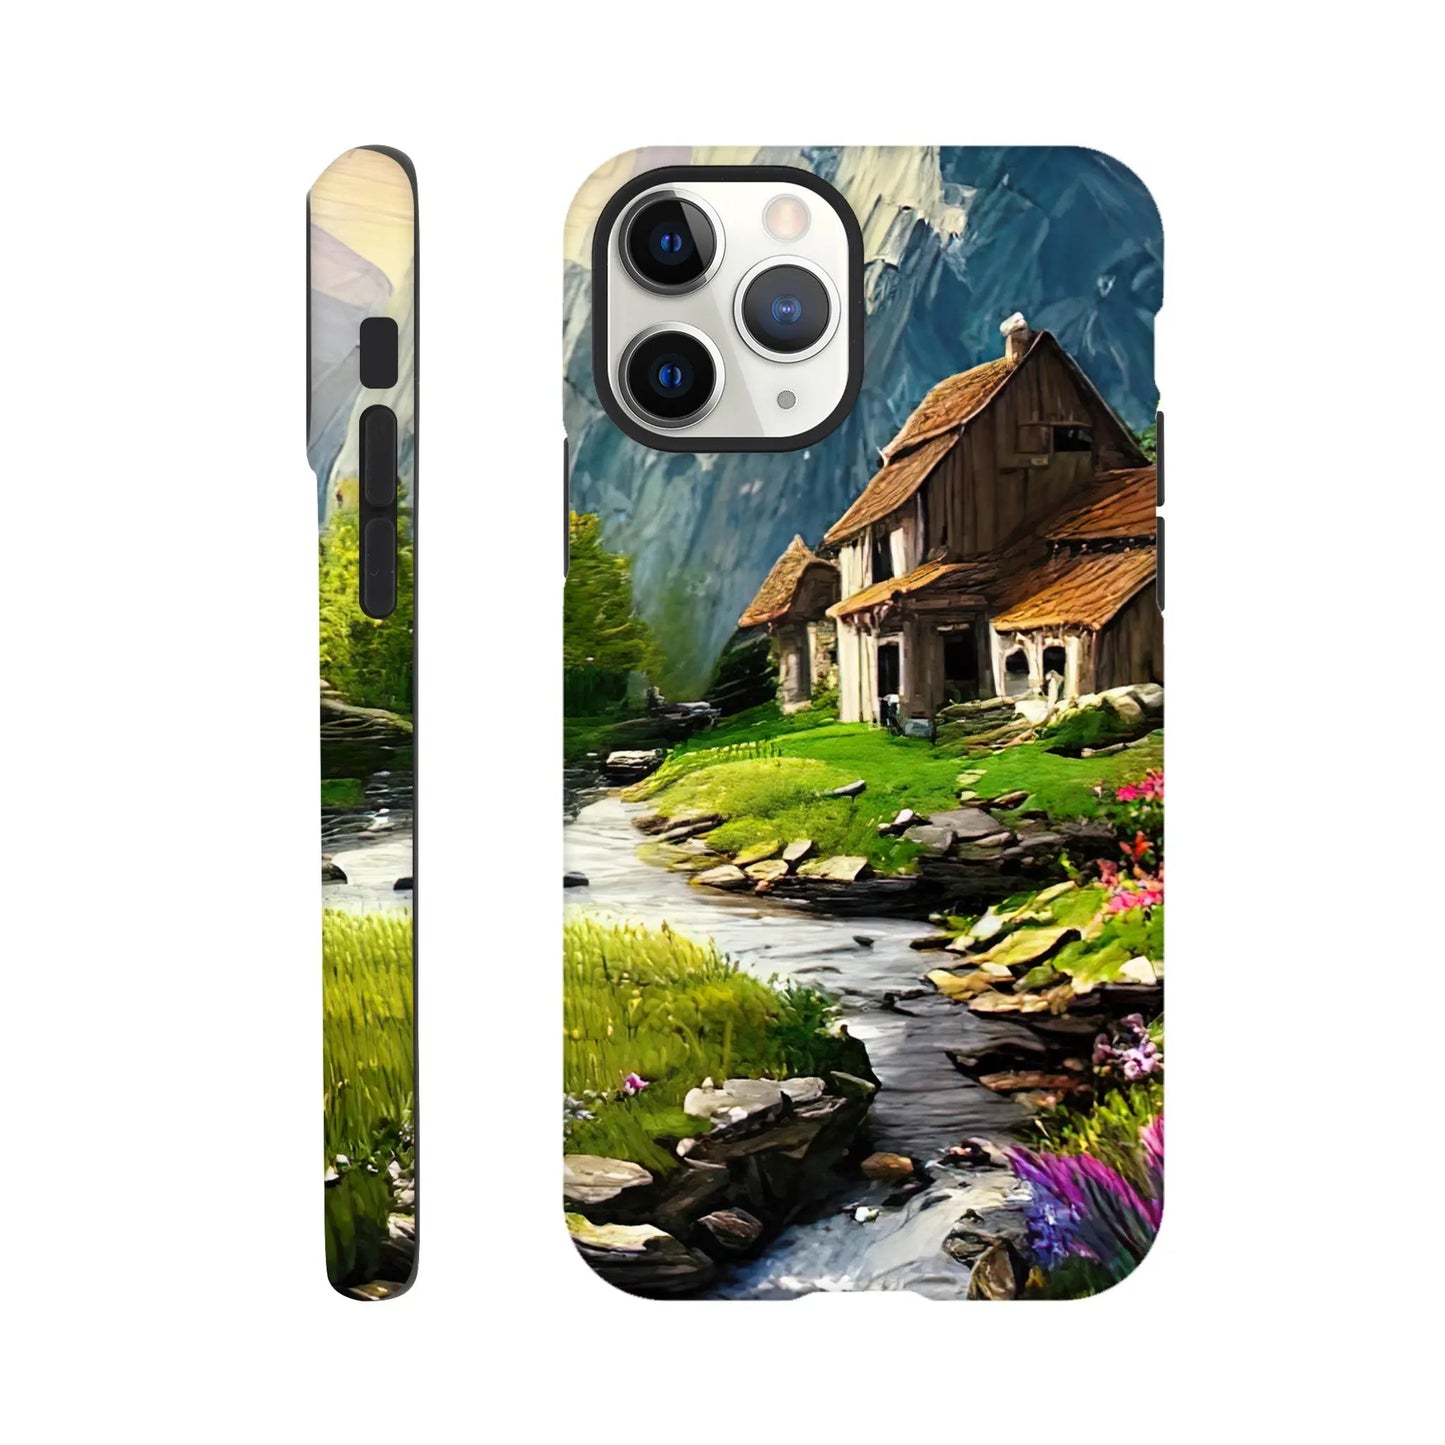 Smartphone-Hülle "Hart" - Berglandschaft - Malerischer Stil, KI-Kunst RolConArt, Landschaften, iPhone-11-Pro